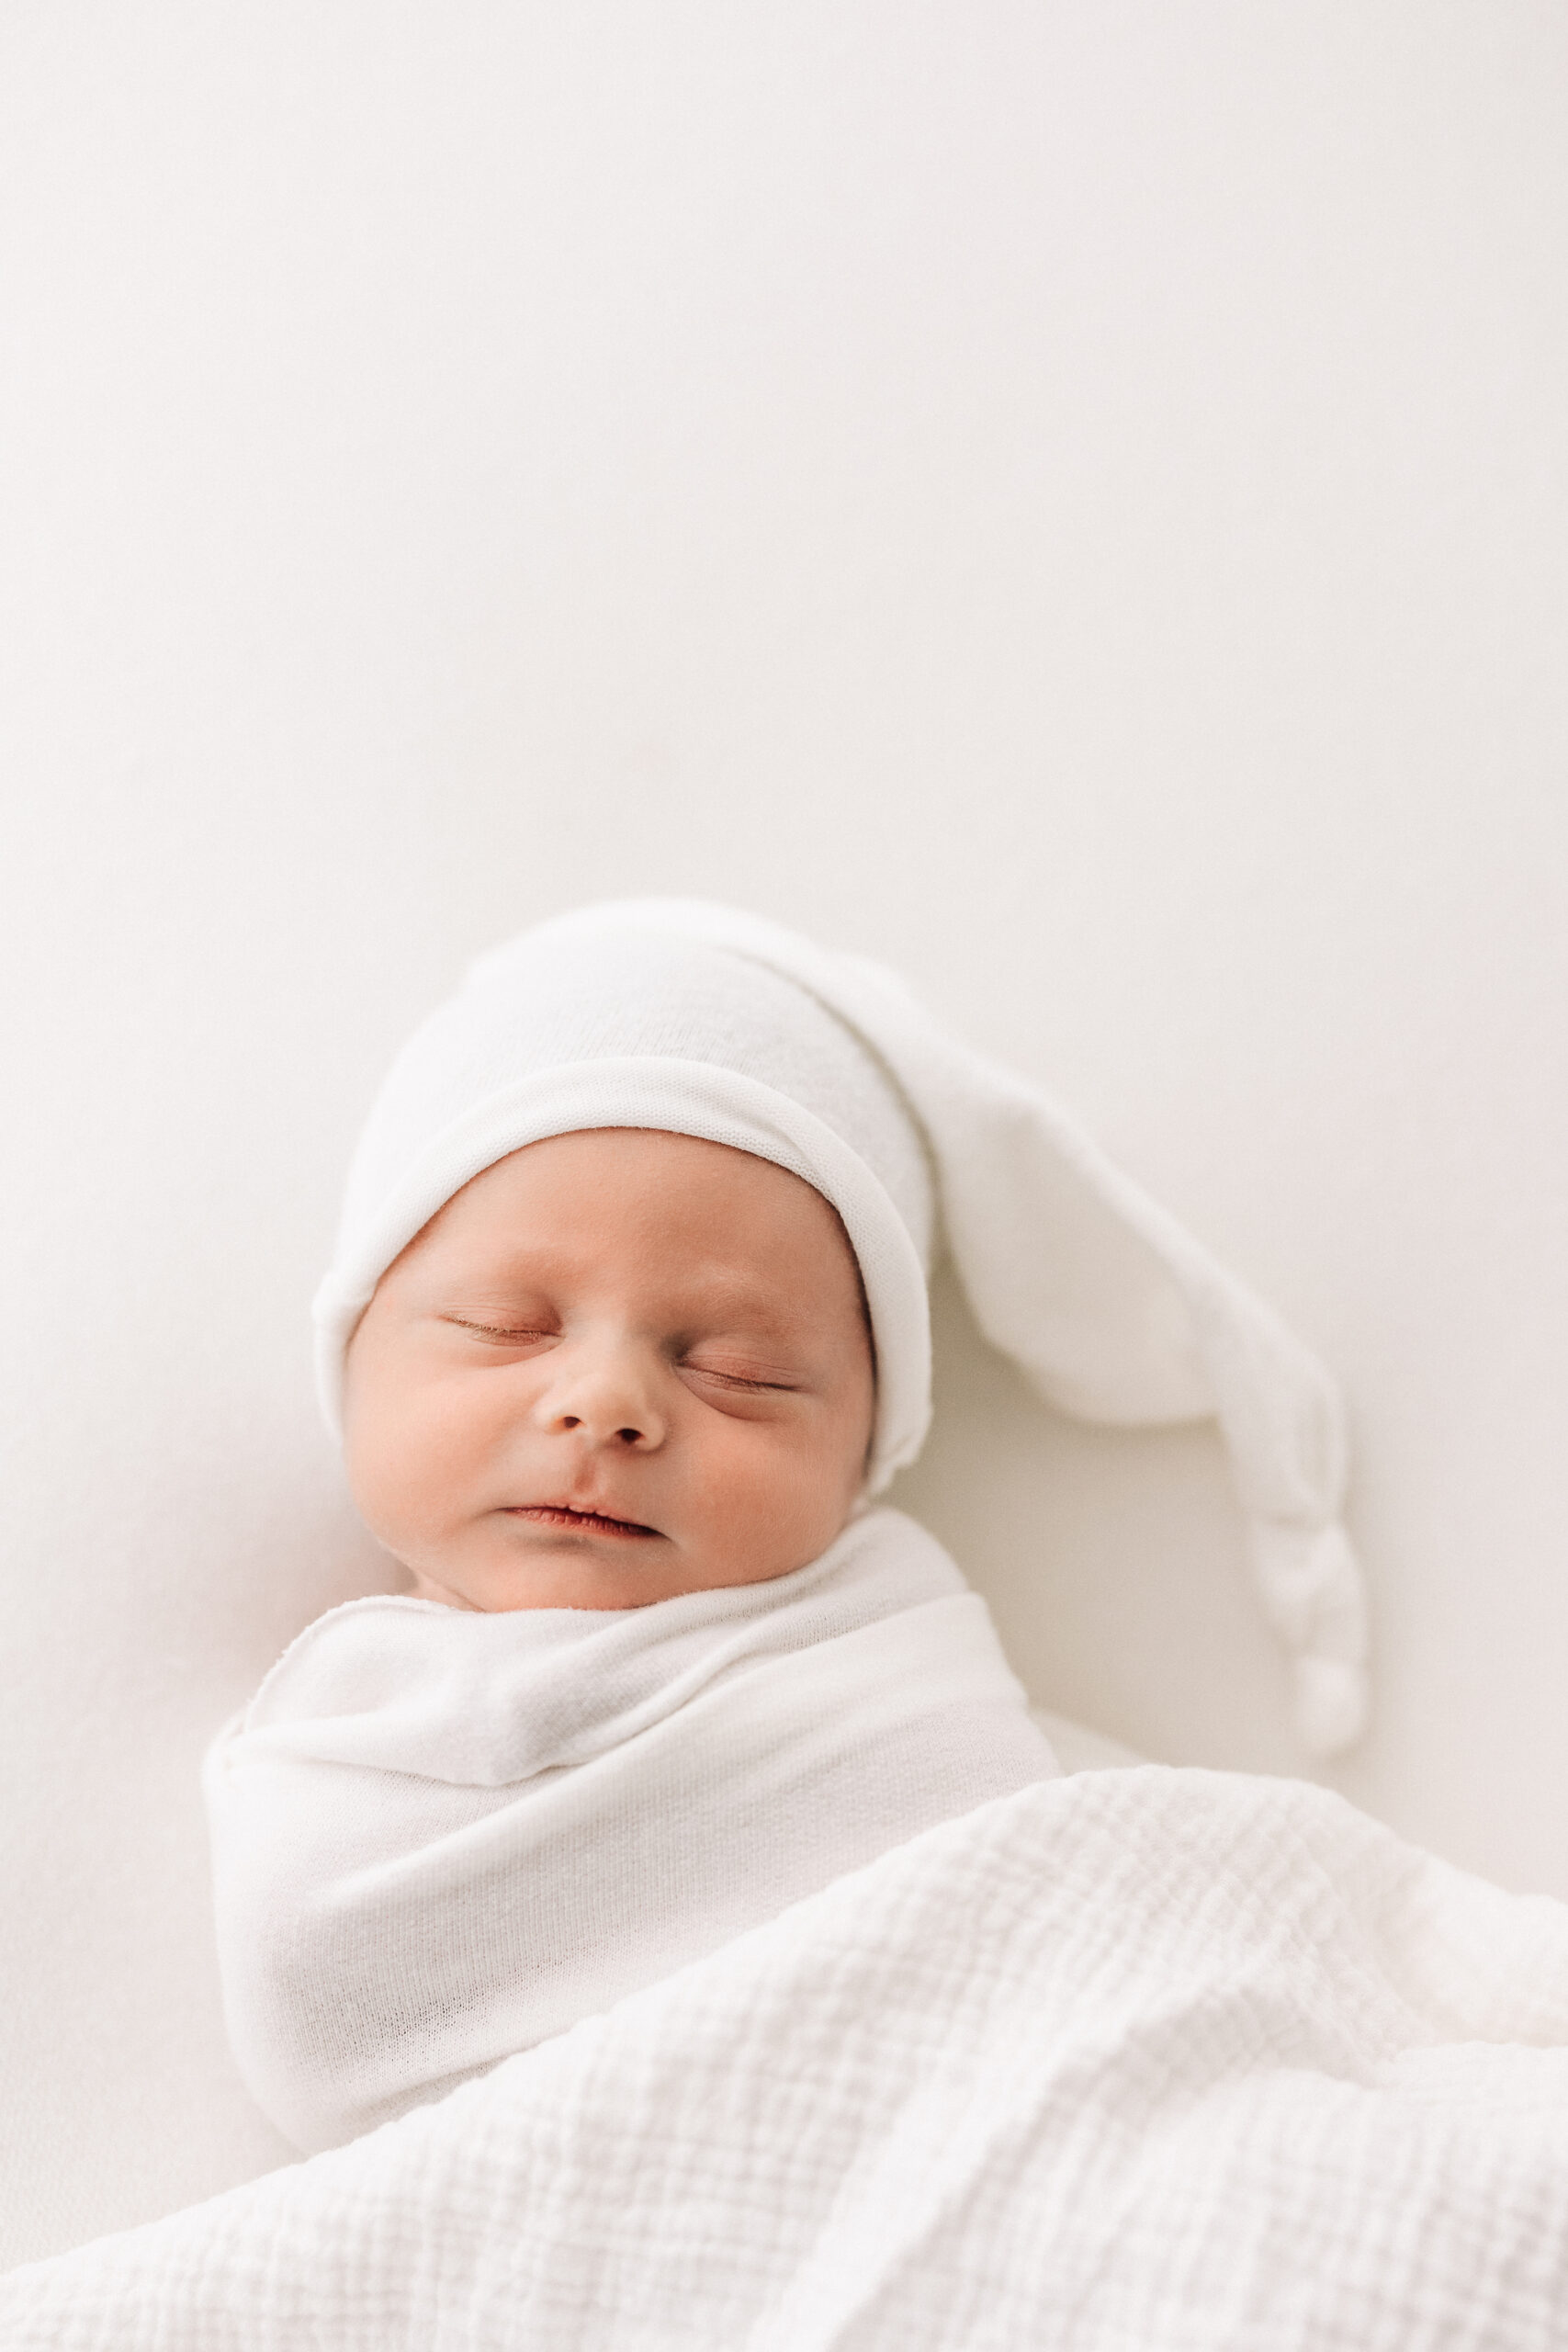 Newborn Baby Boy sleeps while swaddled in white wearing a white sleepy cap